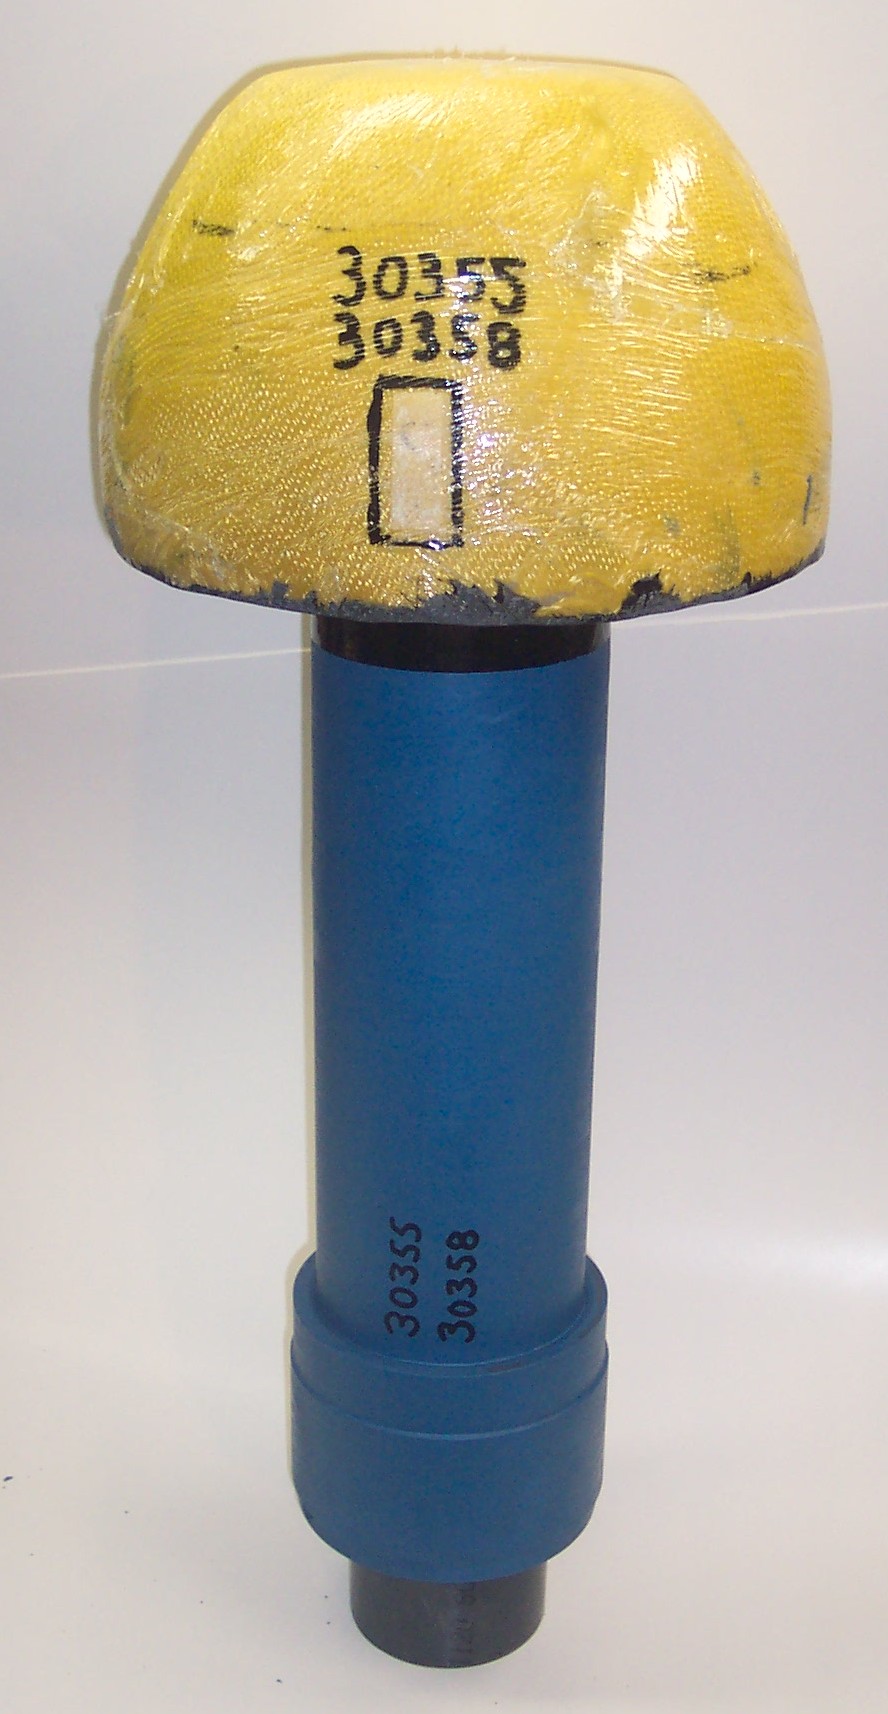 Custom modified submersible Argos beacon Model 113c.